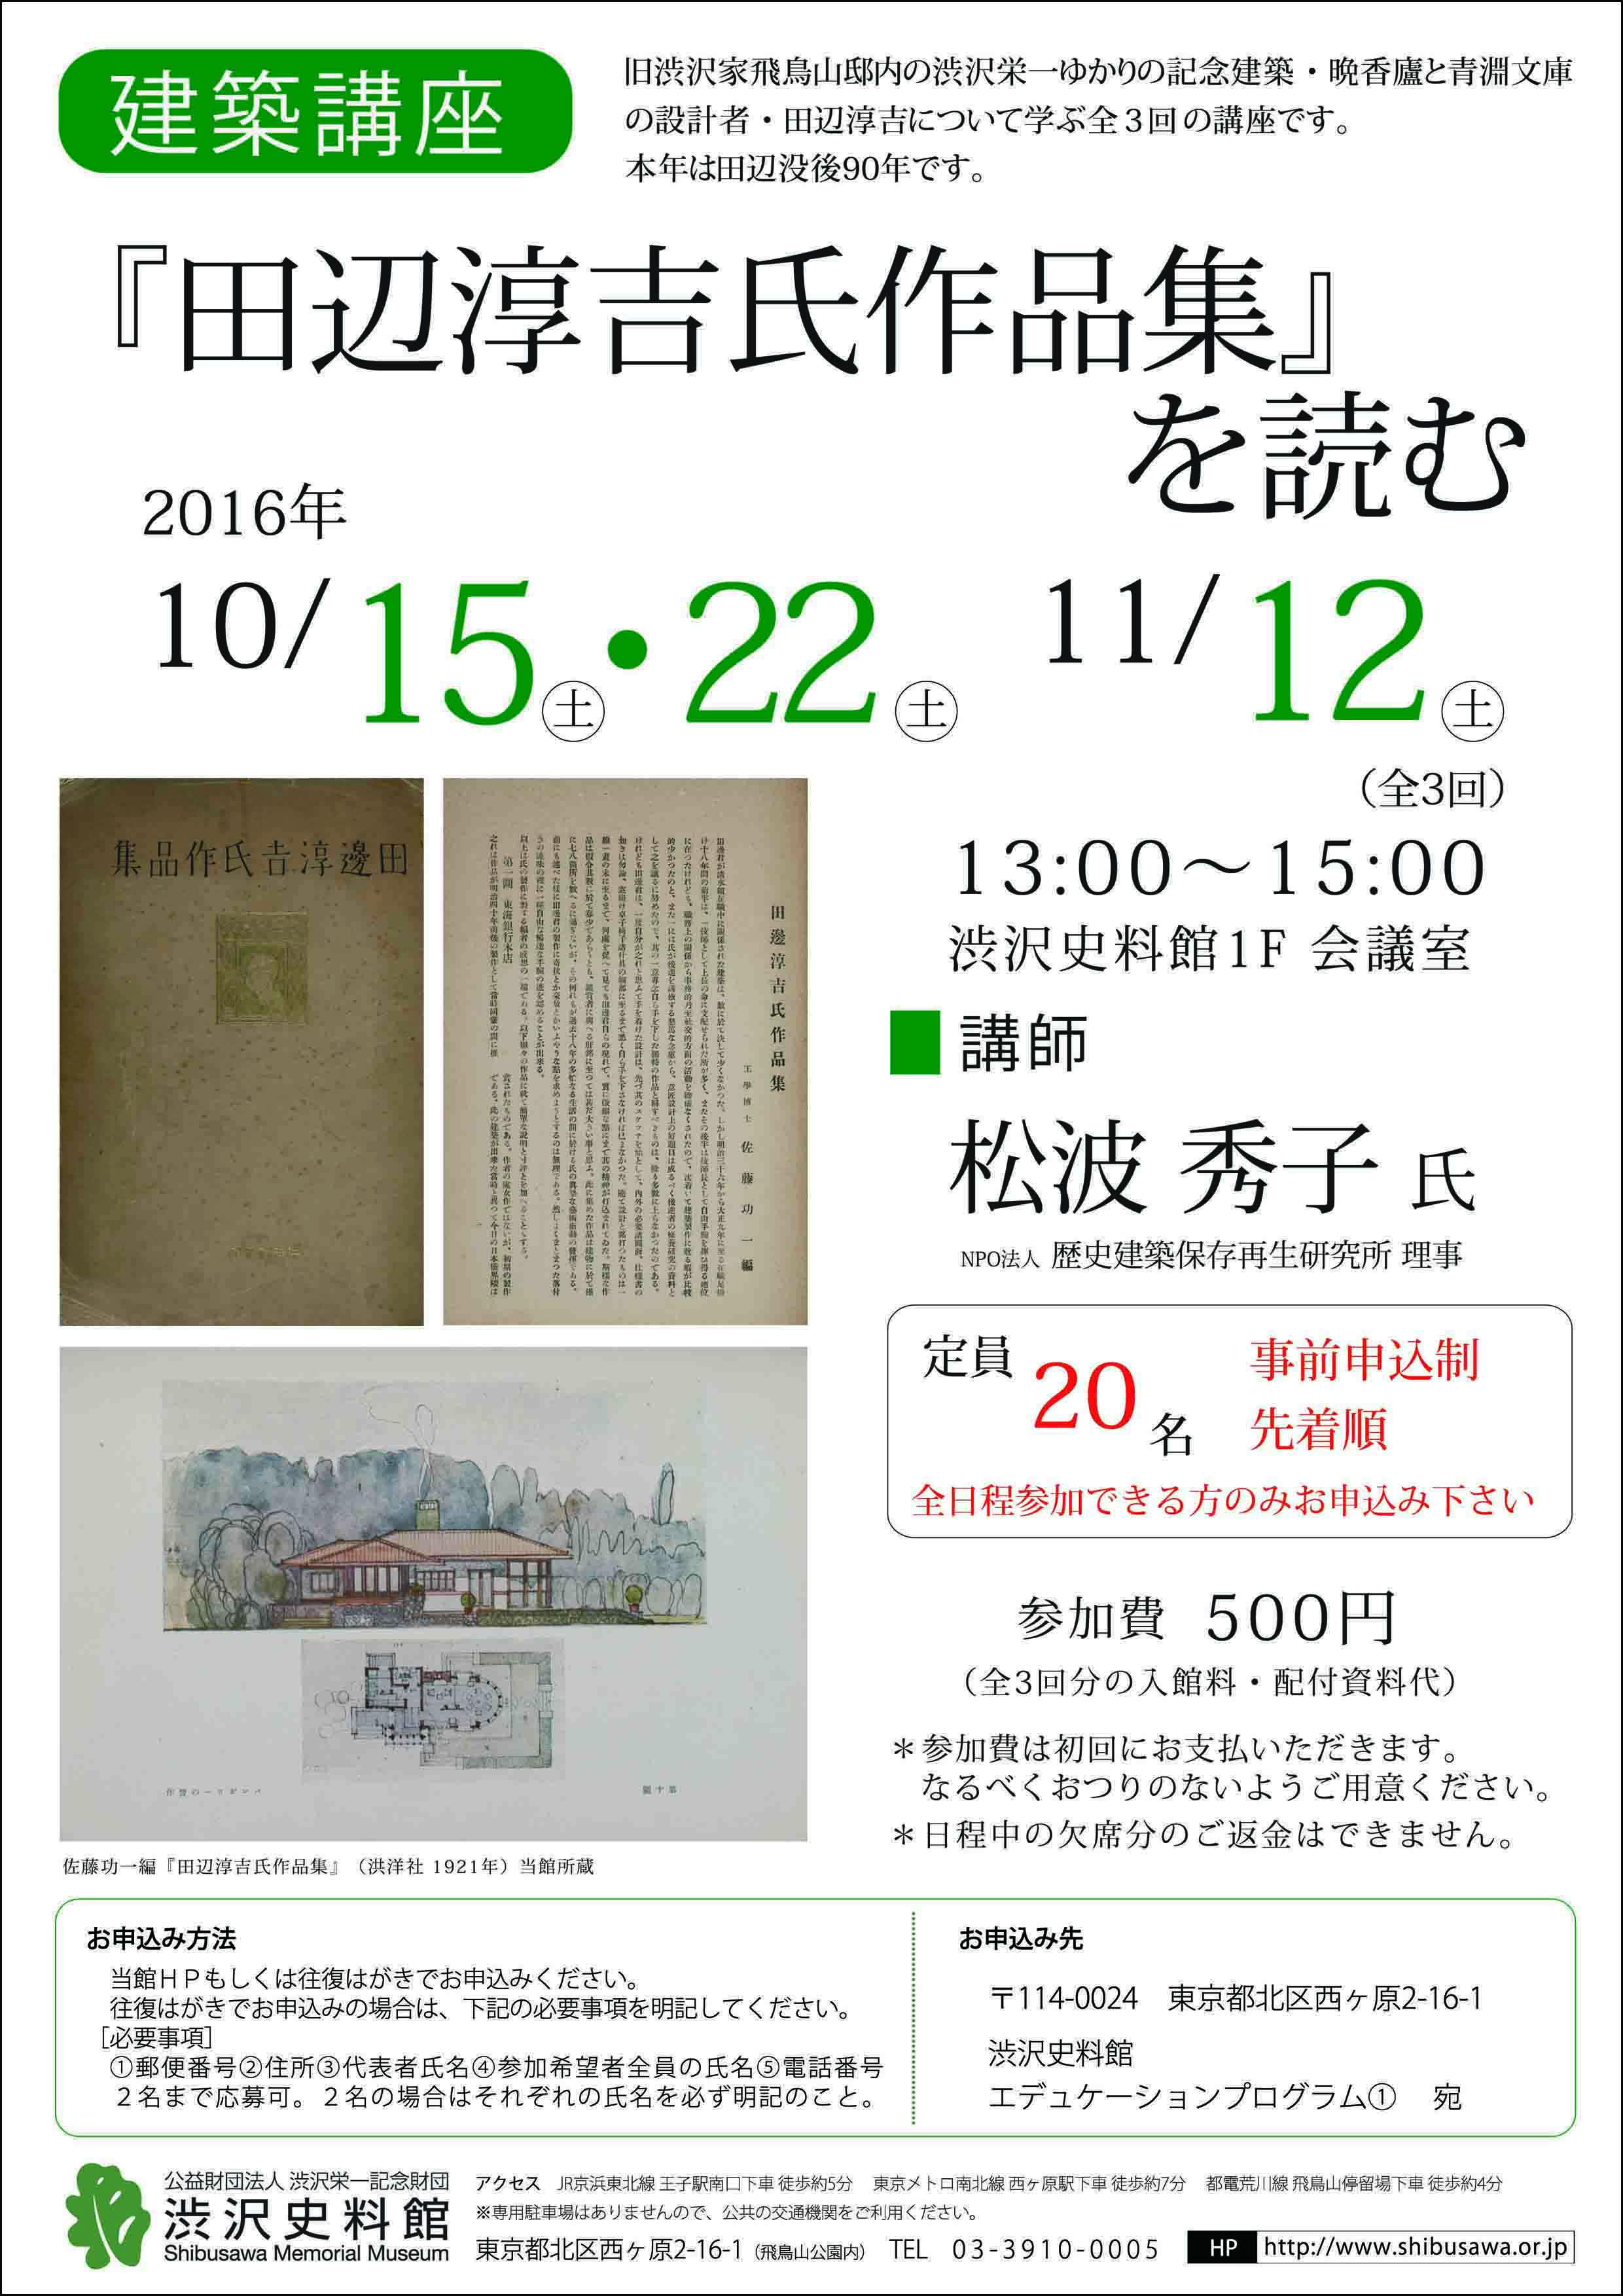 http://www.shibusawa.or.jp/museum/event/photo/kenchiku01.jpg